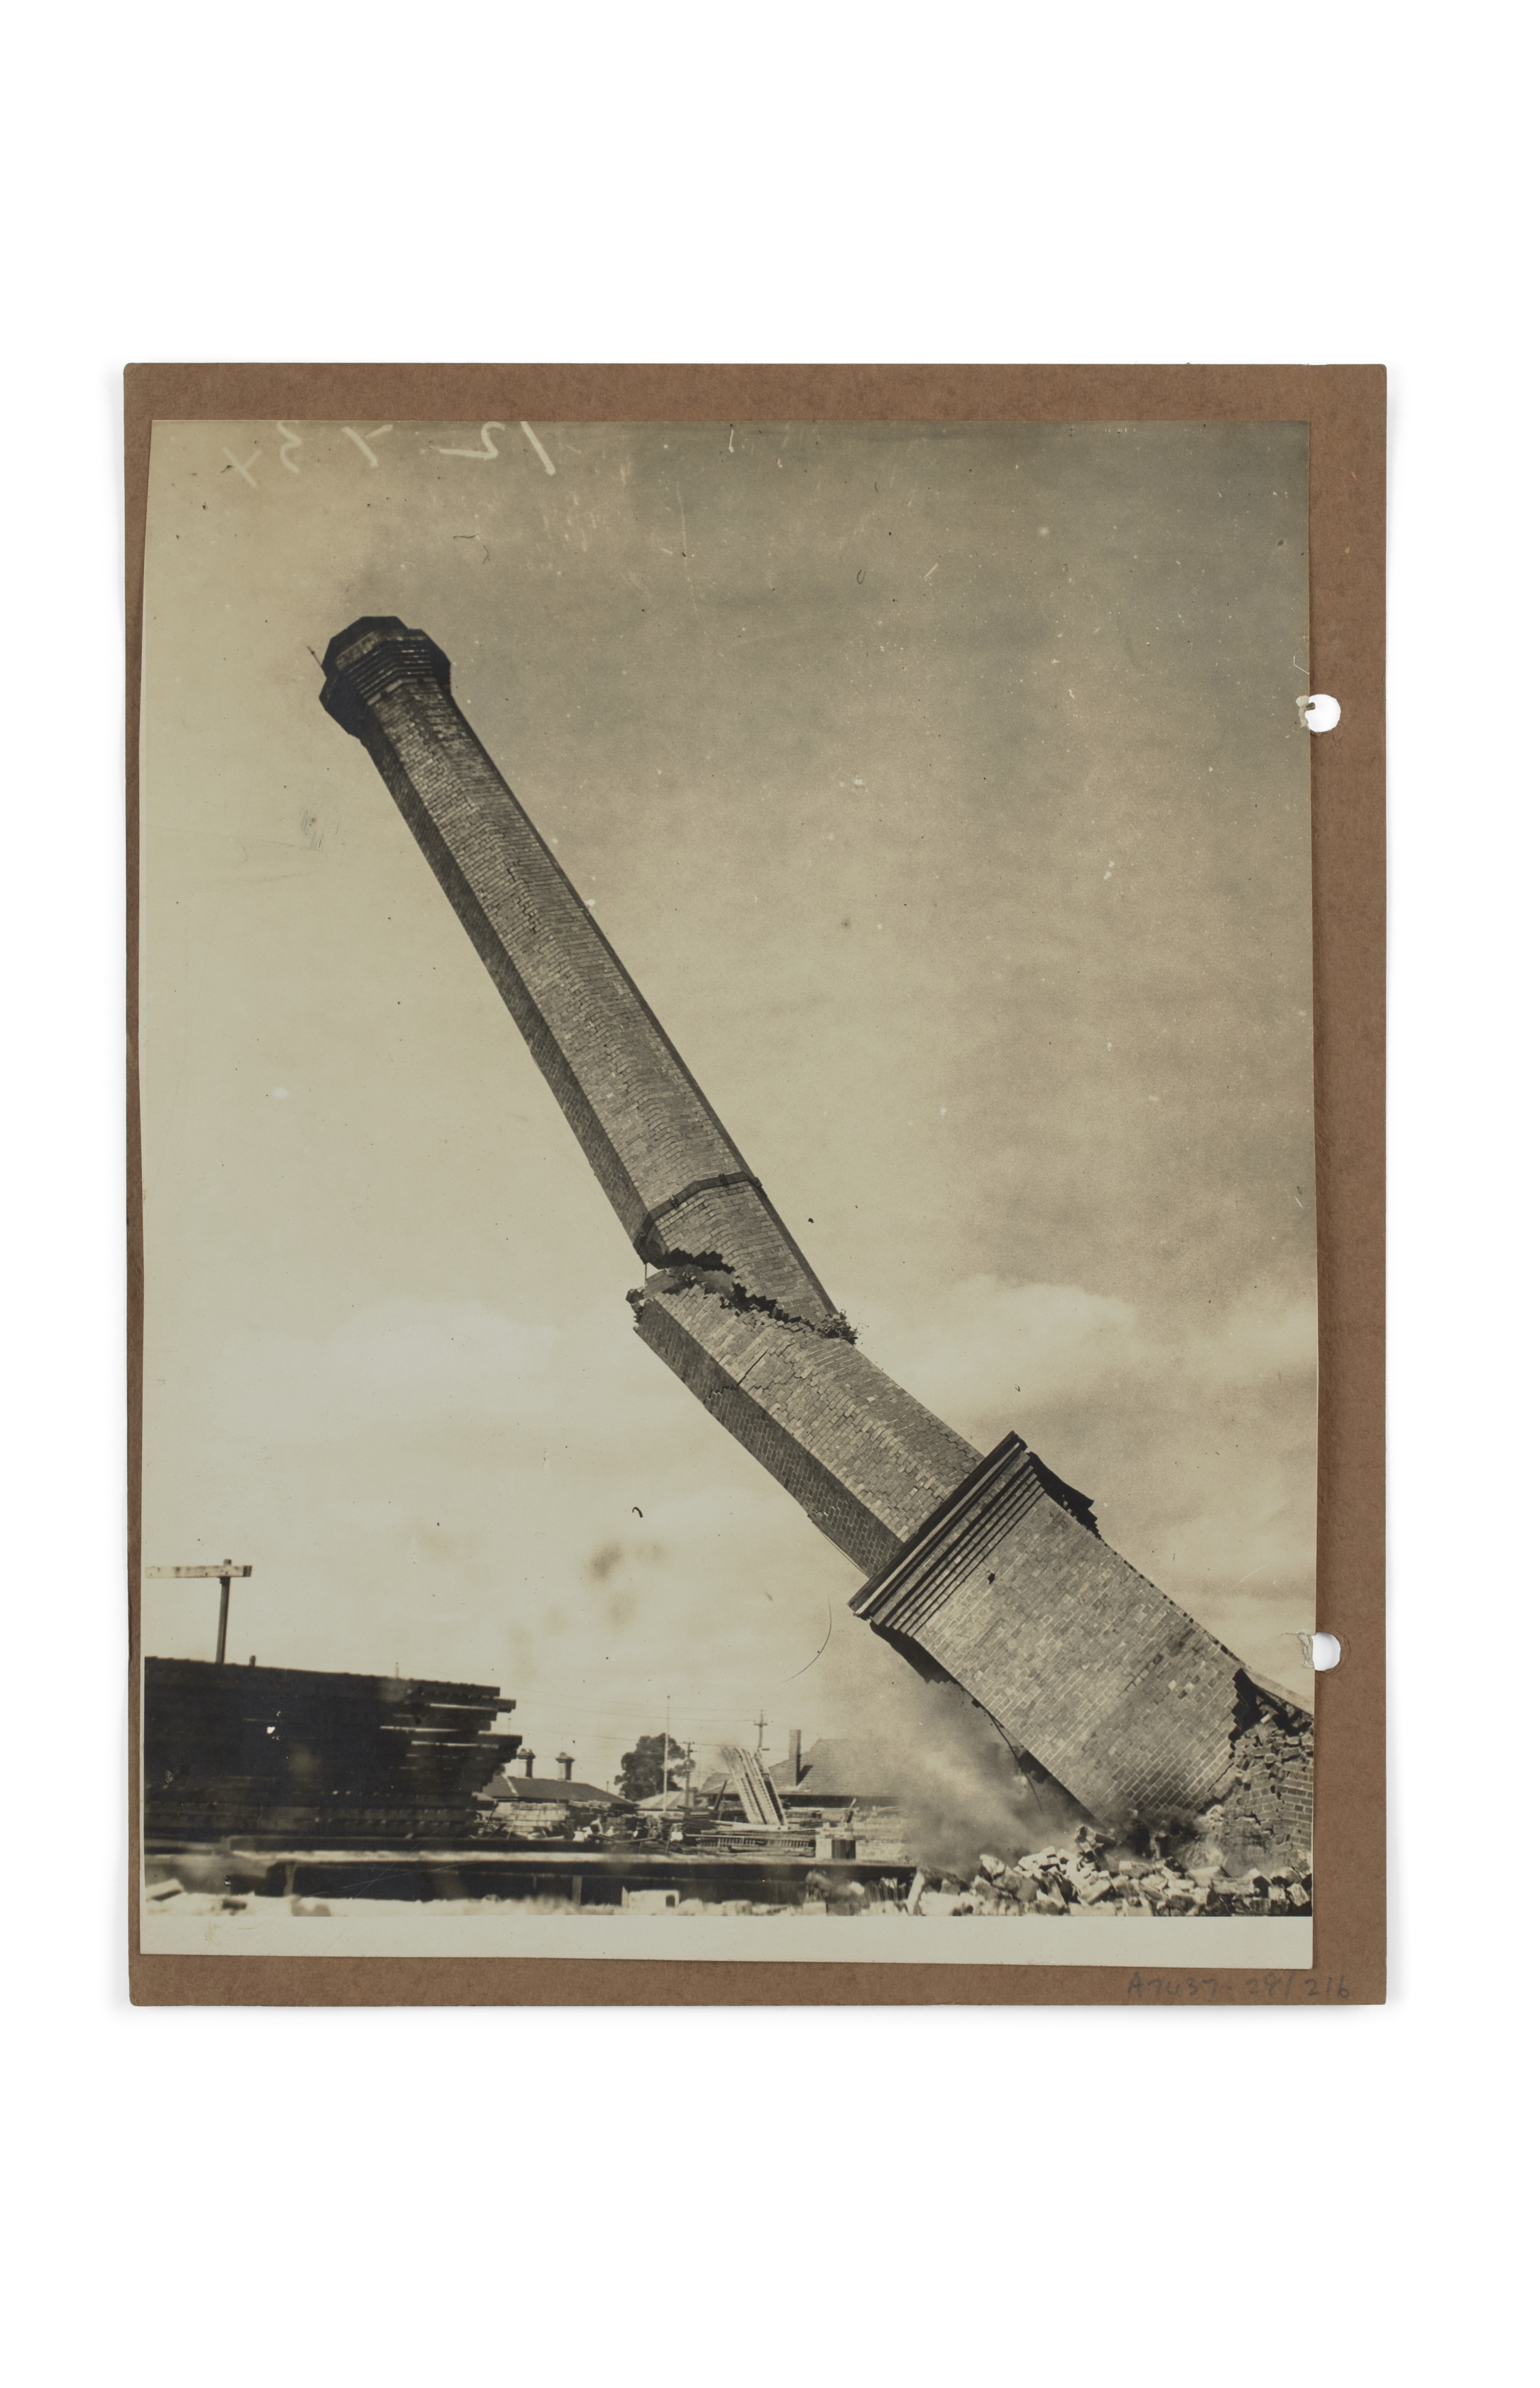 Photograph of demolition of Wunderlich tile factory chimney stack